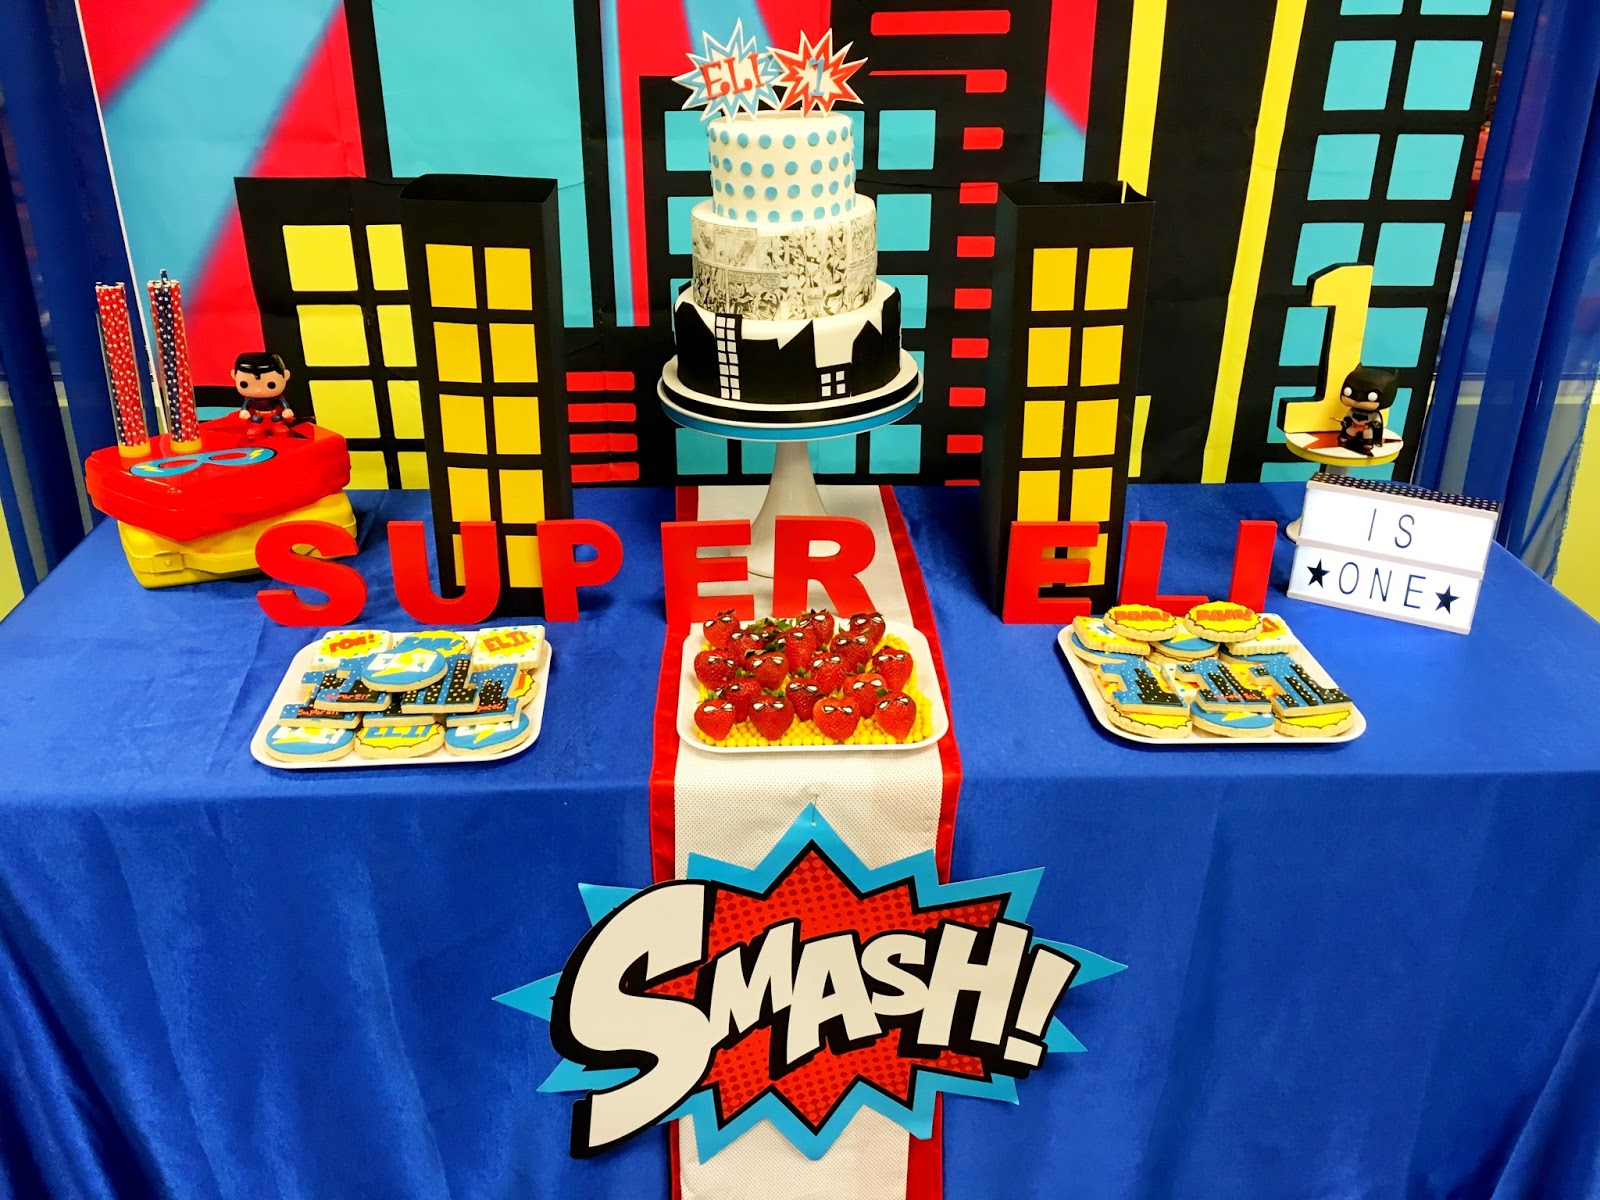 Superheros- Kids birthday party ideas - Superhero First Birthday Party Ideas by The Celebration Stylist